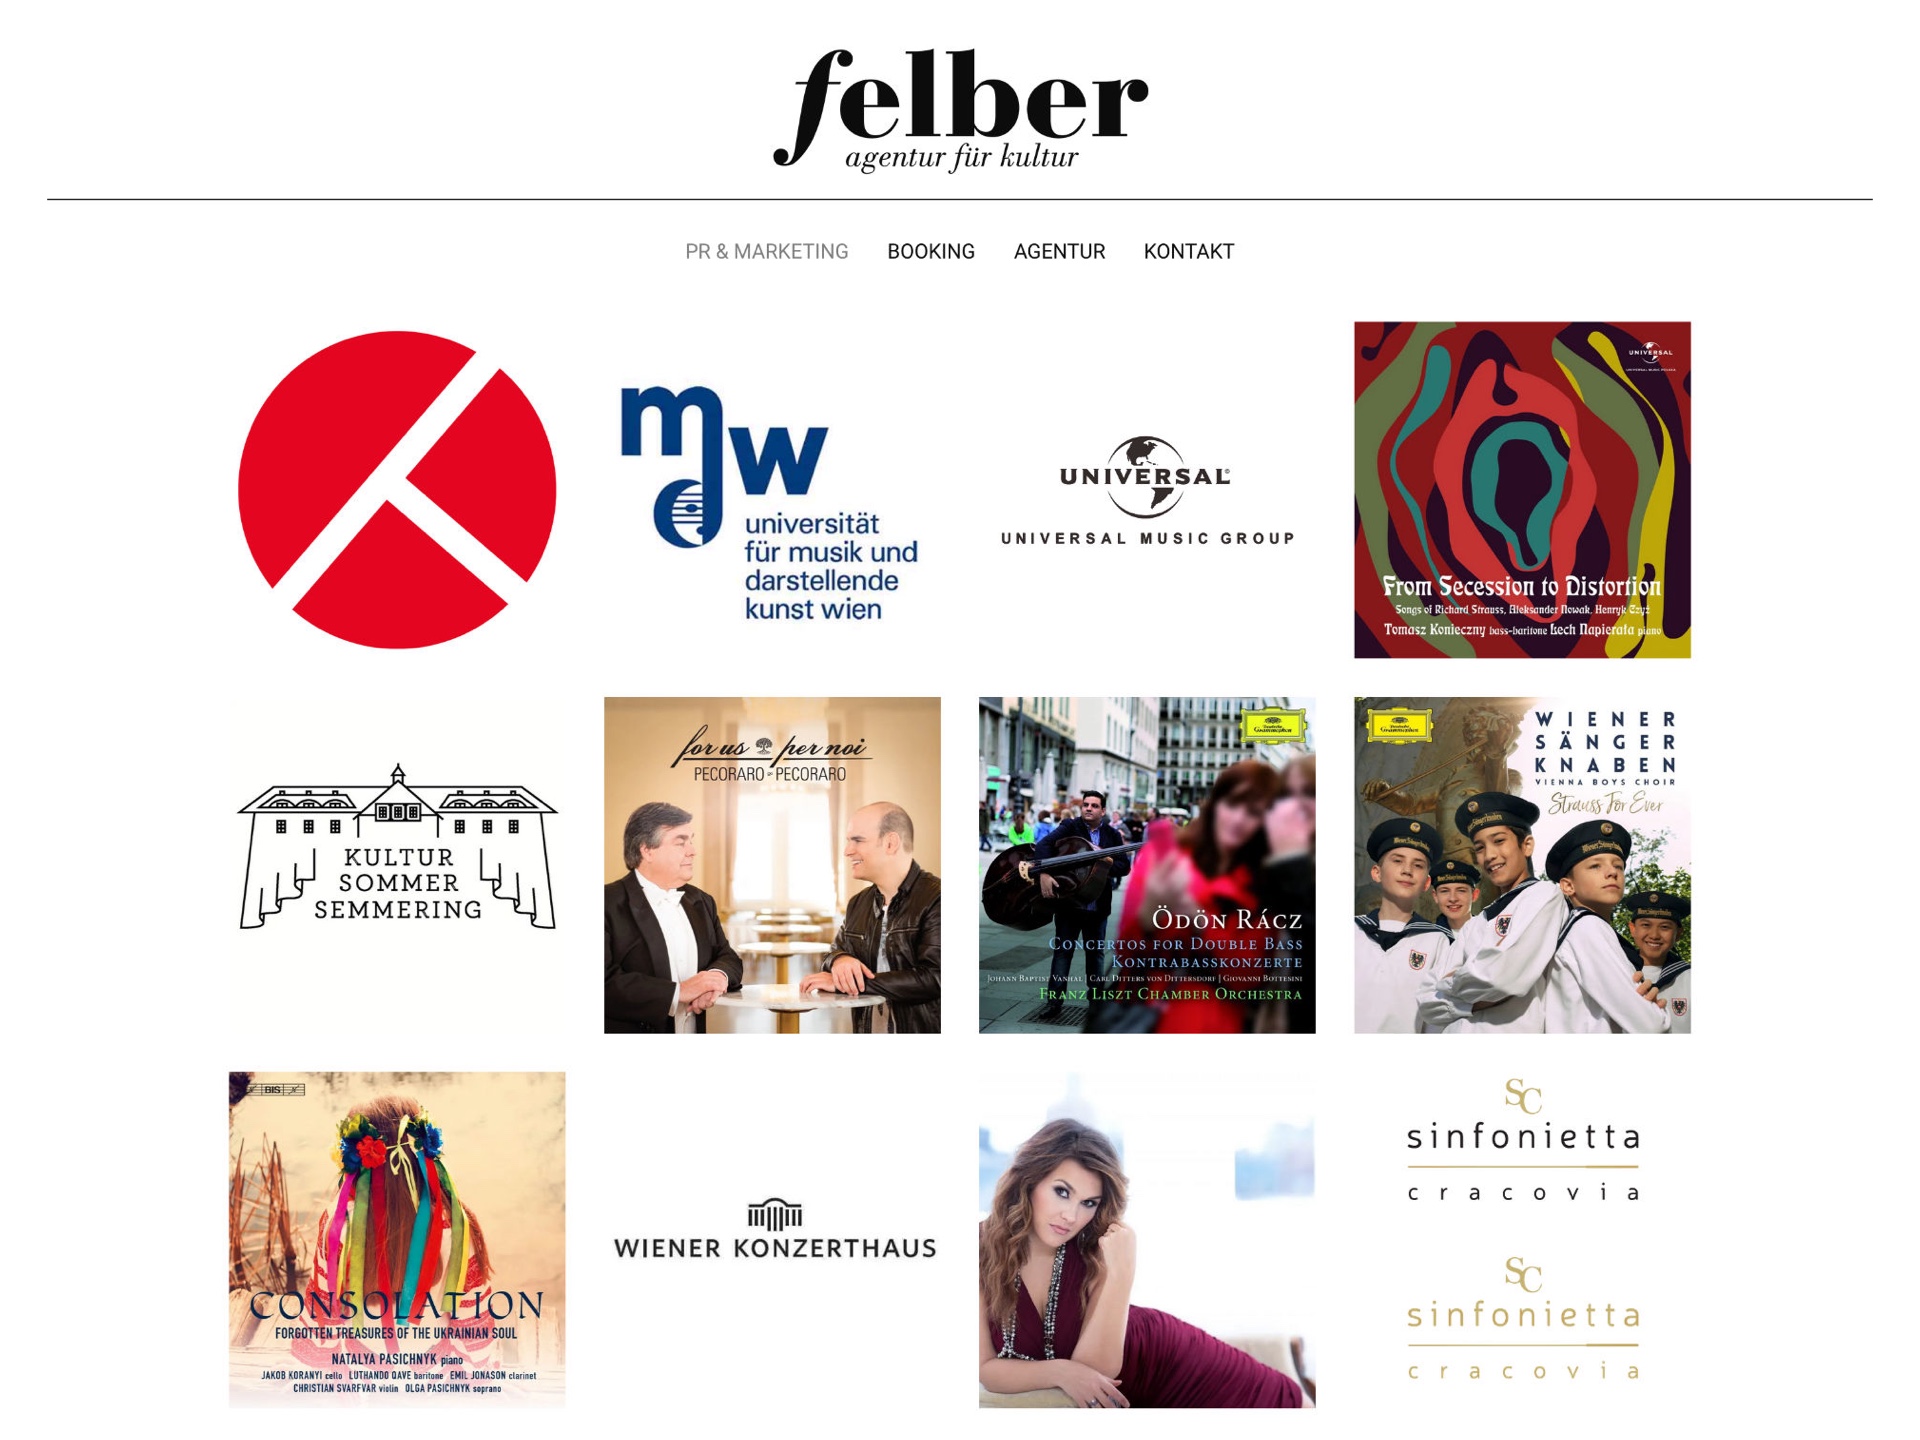 Felber - Agentur für Kultur Website Screenshot